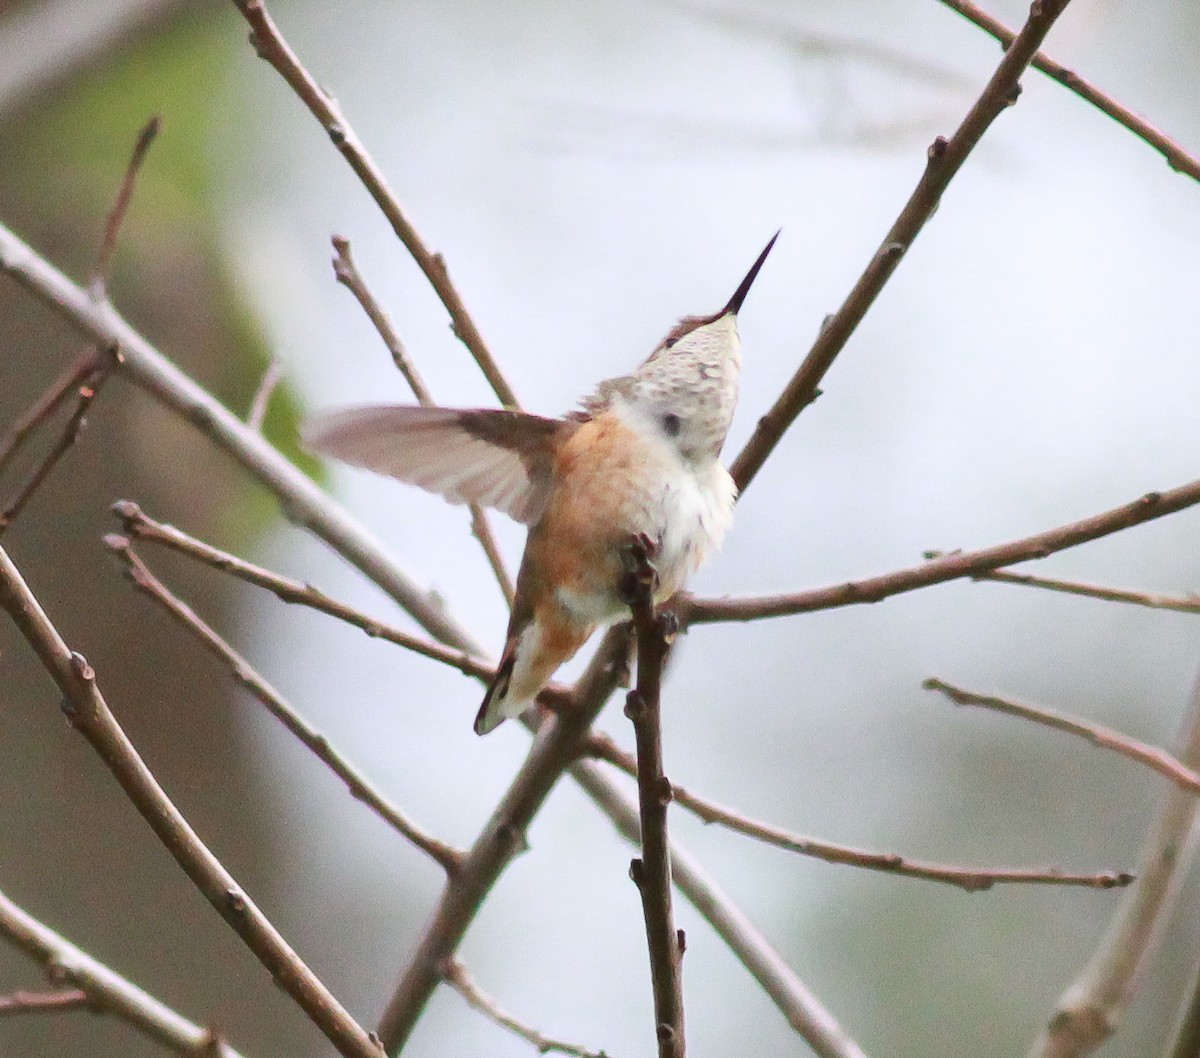 Rufous Hummingbird - Bob Fogg